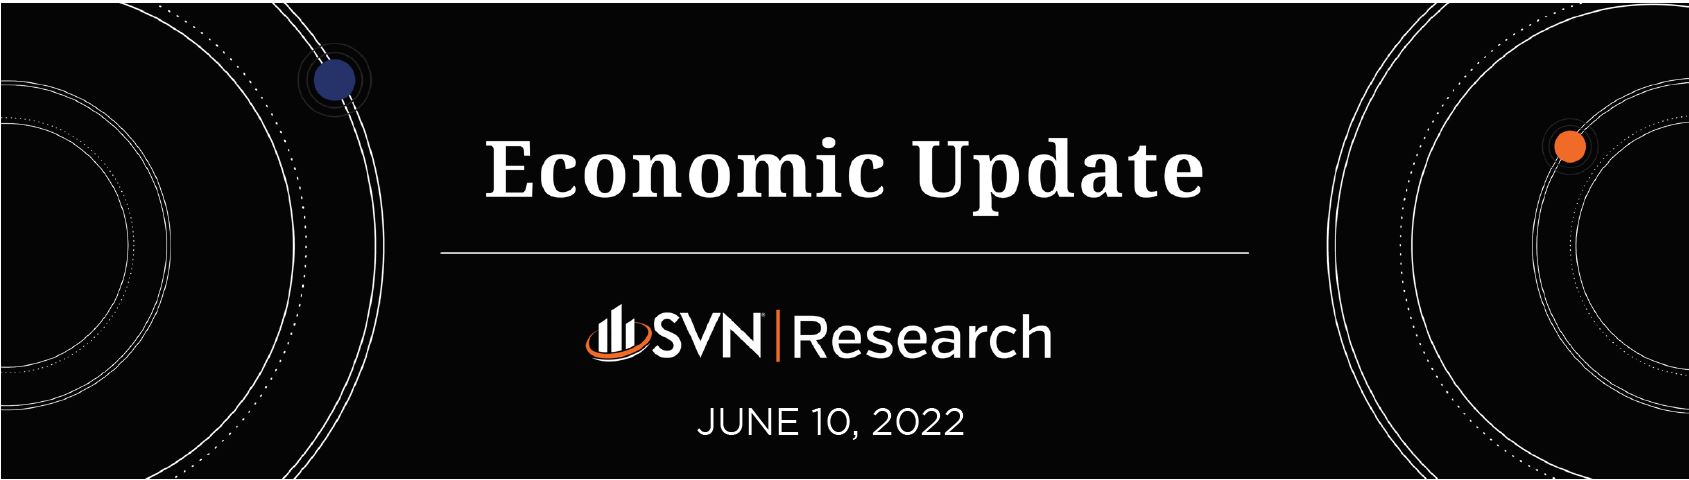 SVN | Research Economic Update 6.10.2022